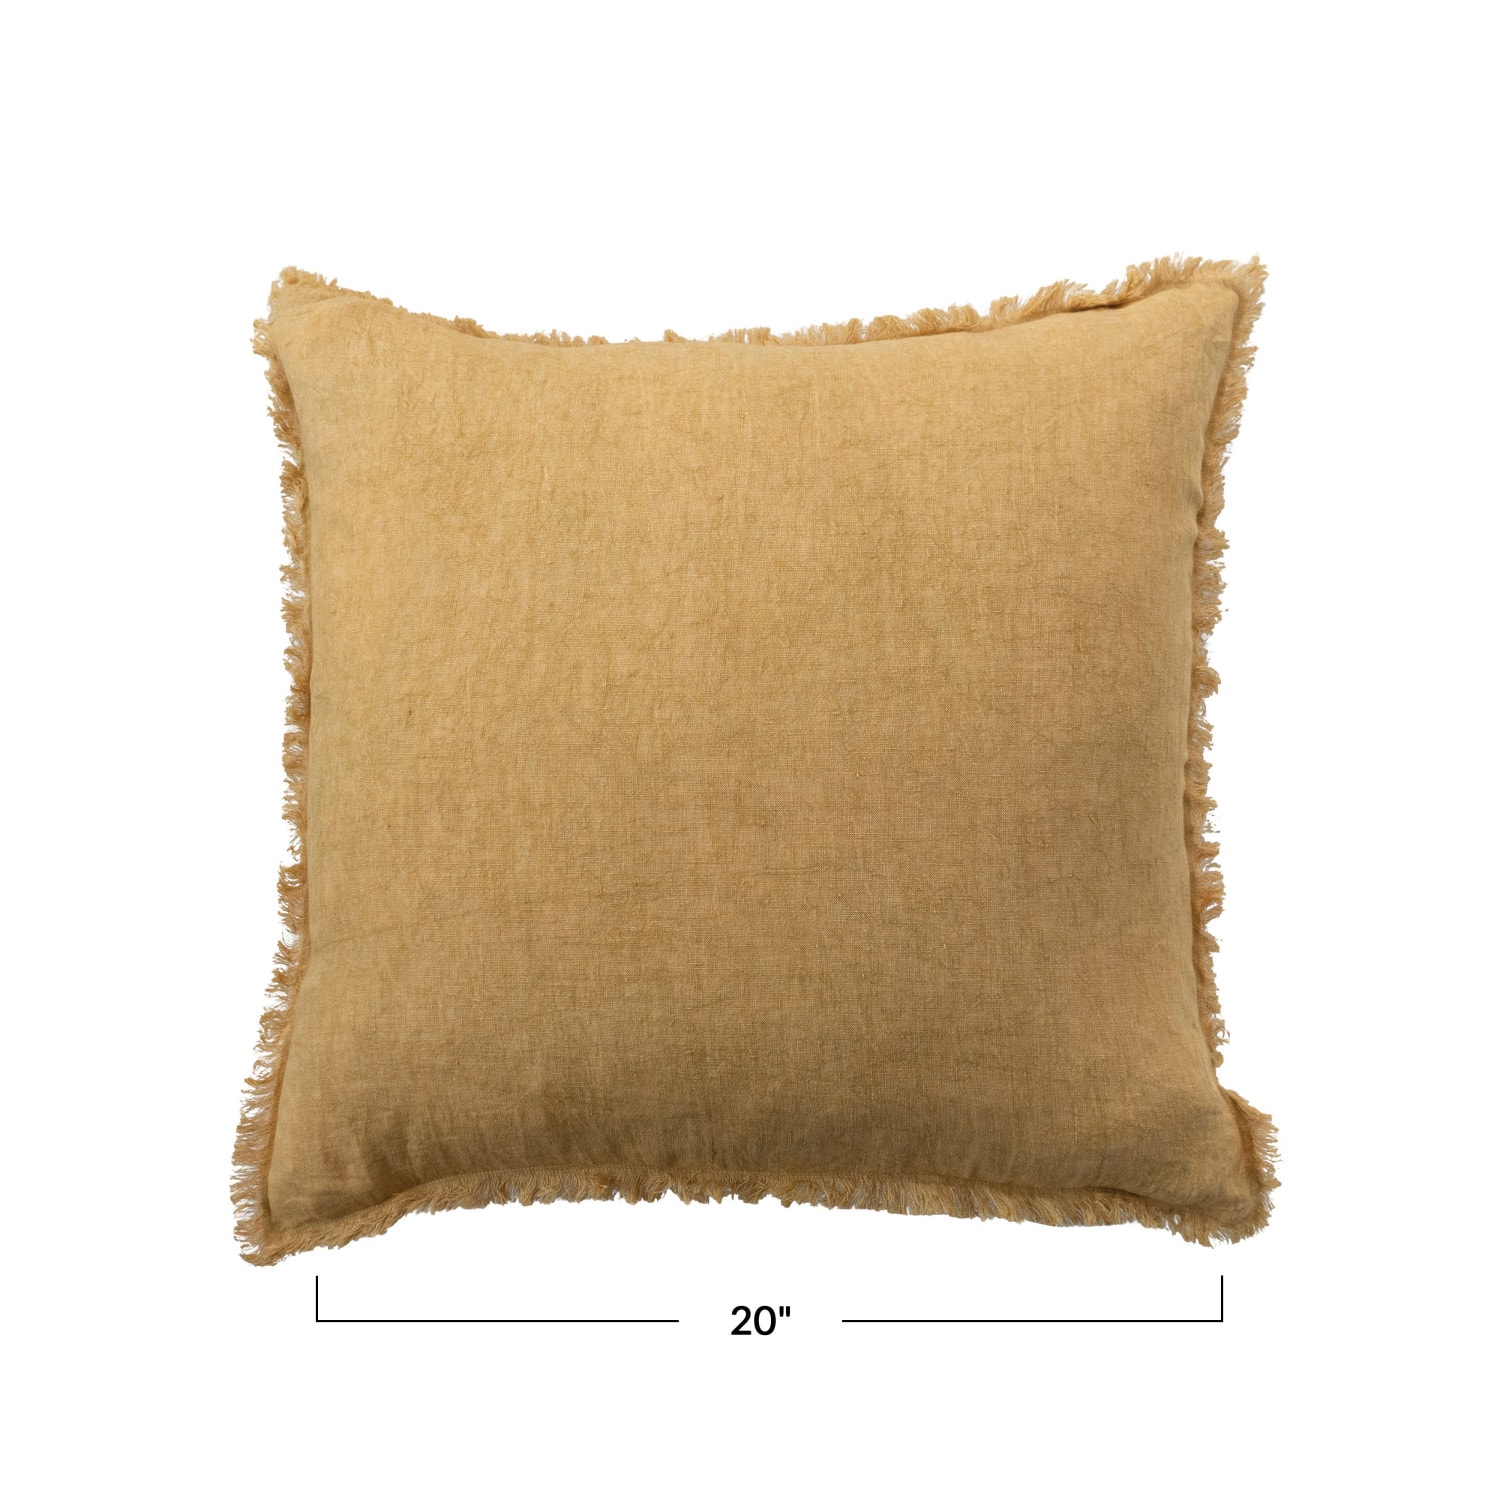 Stonewashed Linen Pillow with Fringe